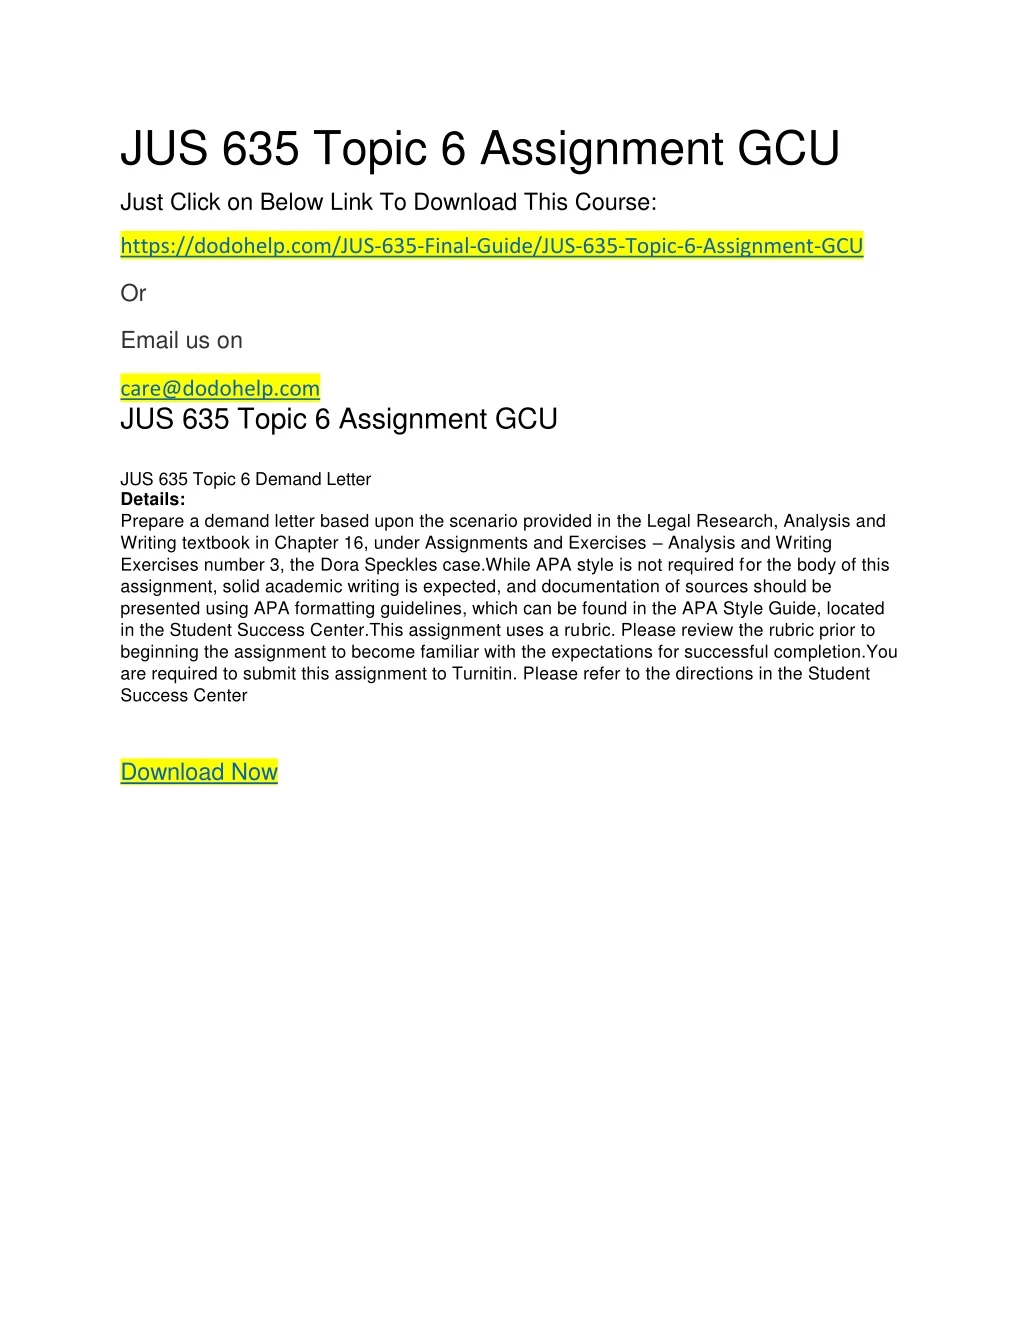 jus 635 topic 6 assignment gcu